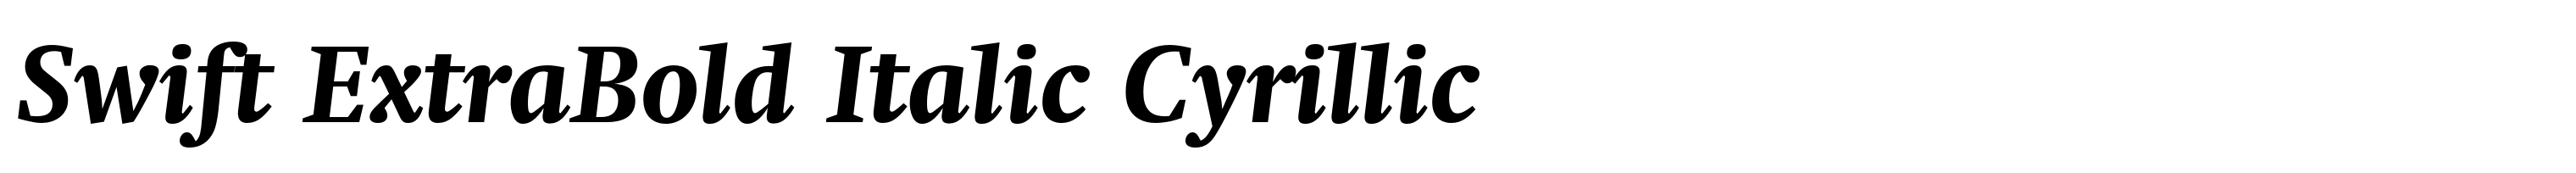 Swift ExtraBold Italic Cyrillic